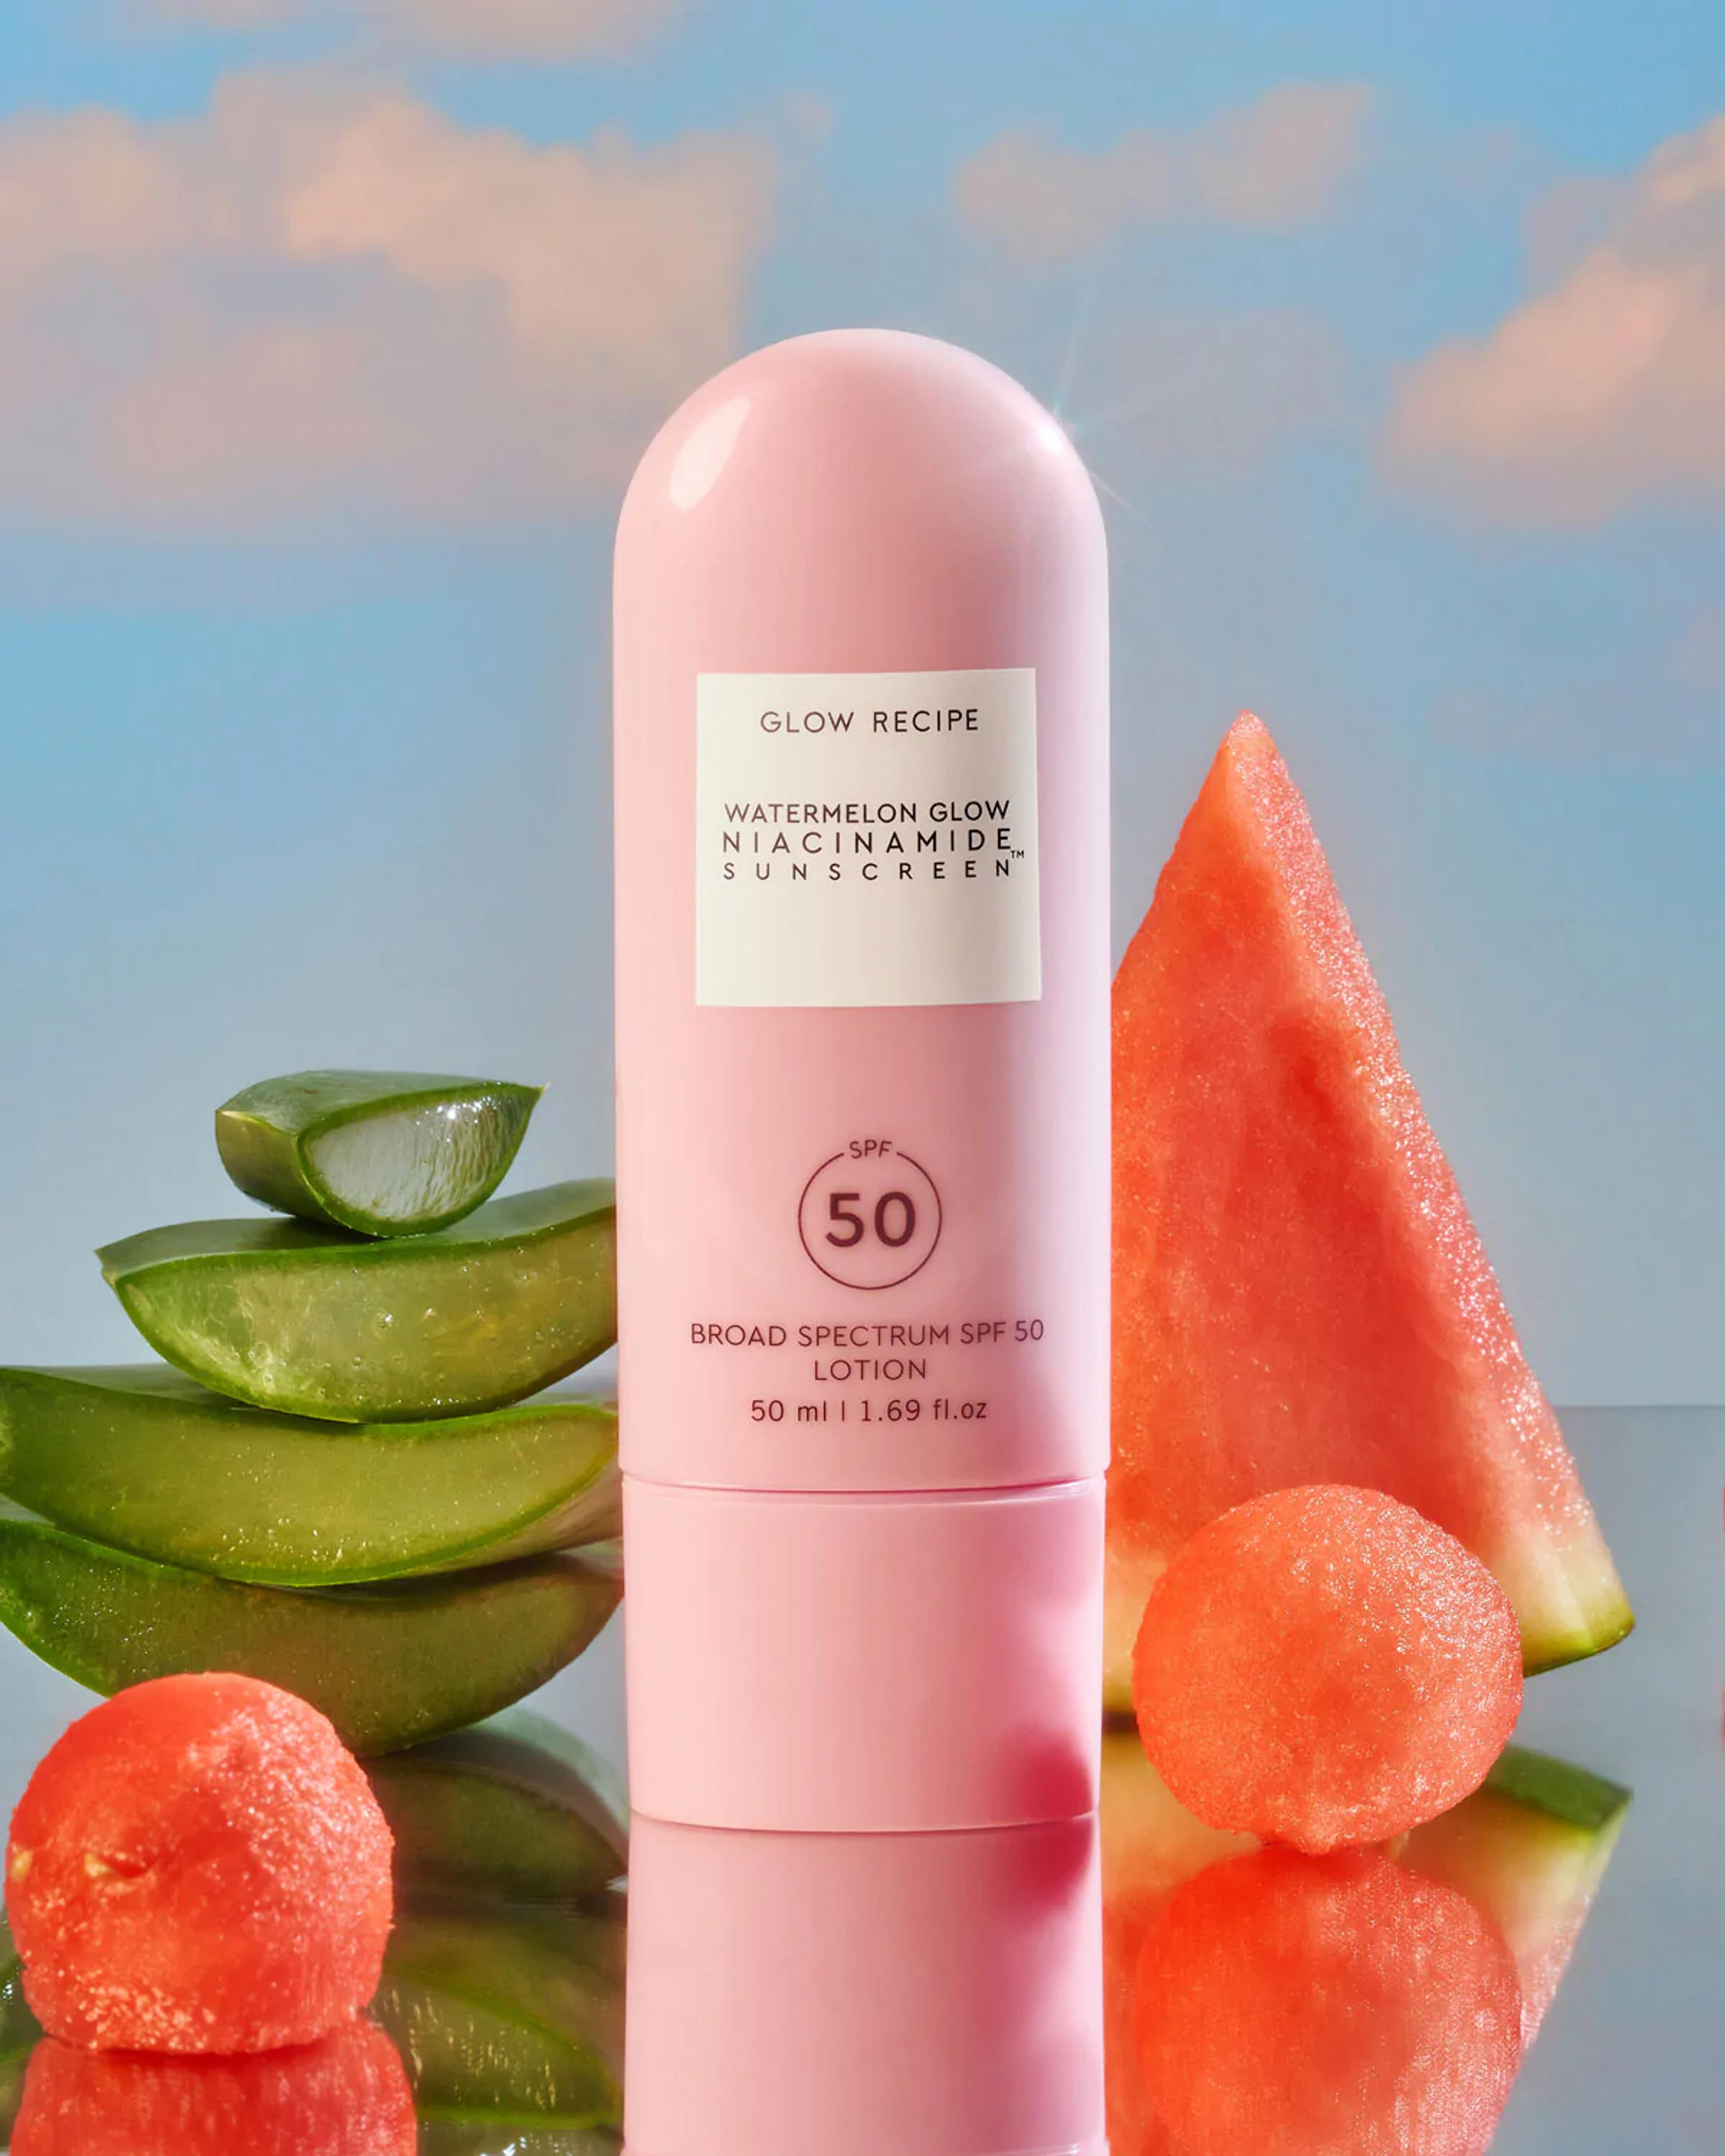 Watermelon Glow Niacinamide Sunscreen SPF 50 - 50ml